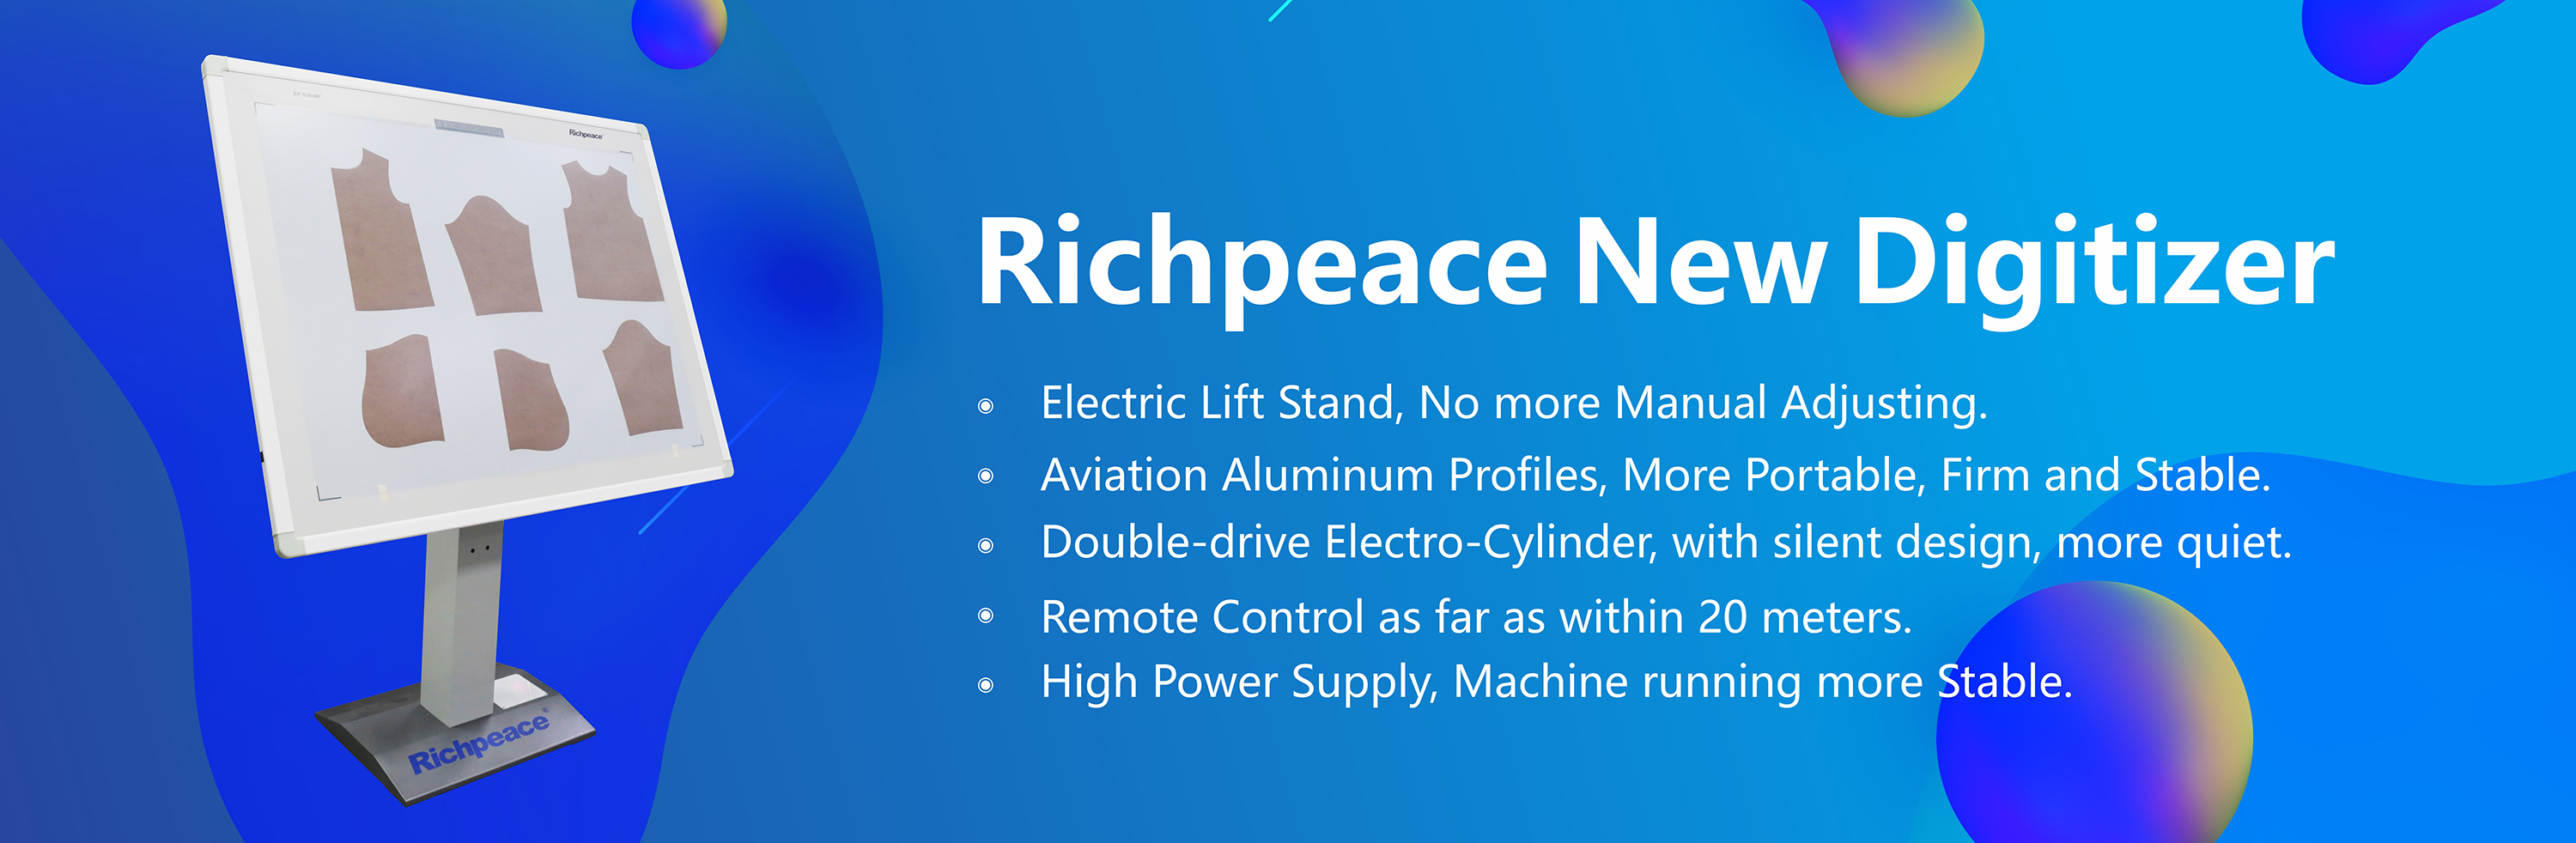 Richpeace New Digitizer